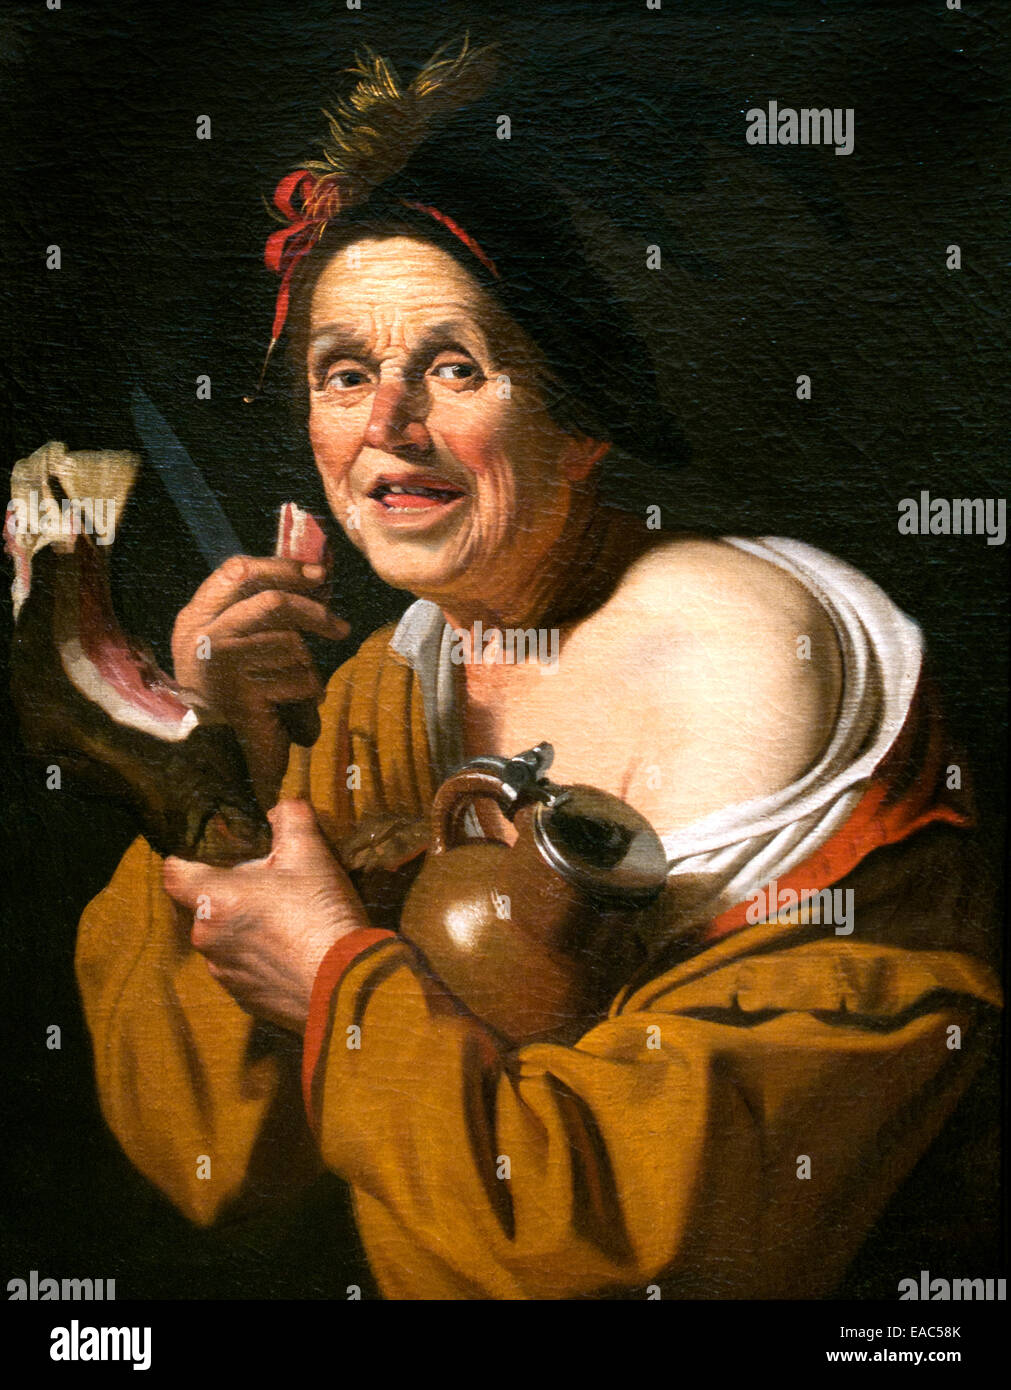 Le mangeur de jambon - Eater ham by Gerrit van Honthorst 1590-1656  Dutch Netherlands Gerard van Honthorst Stock Photo